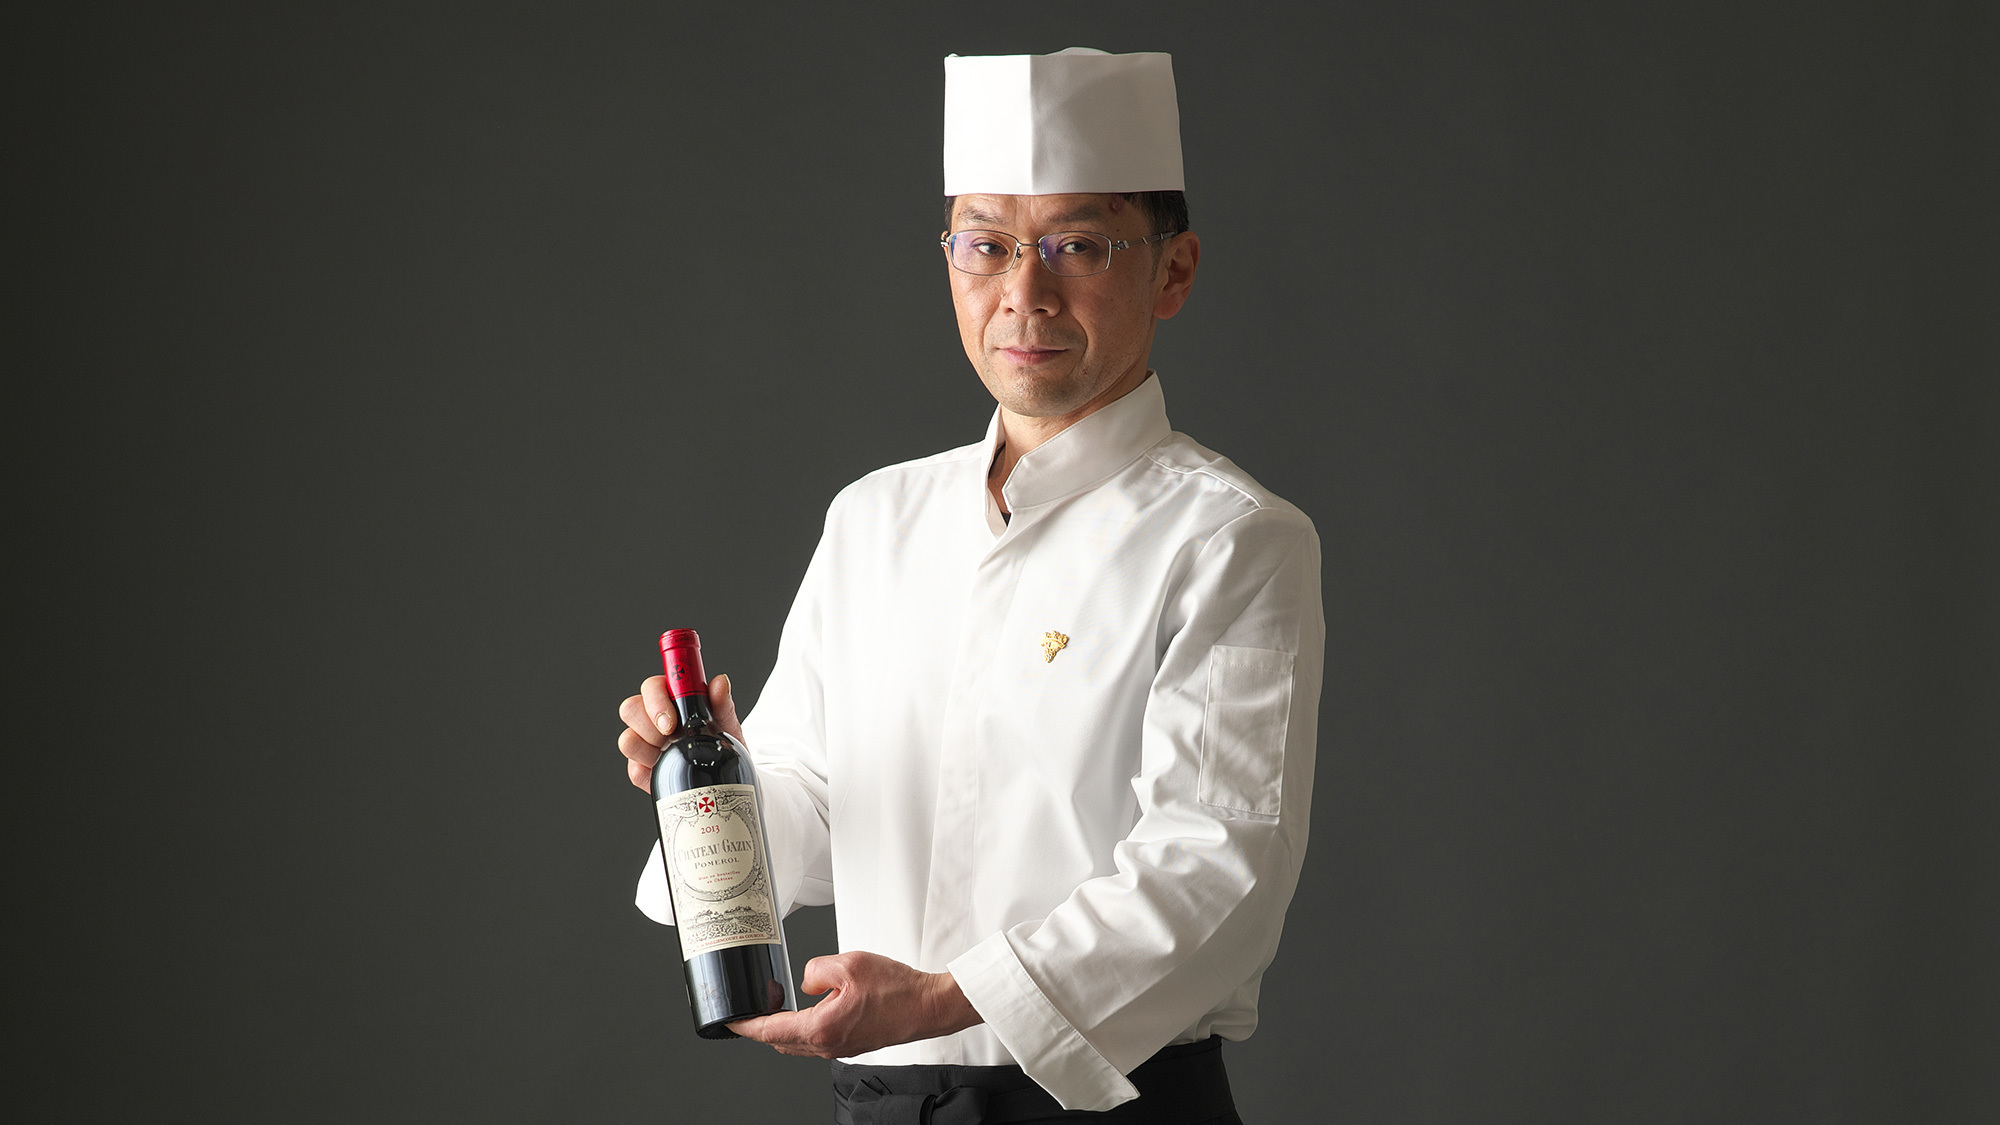 里村正志総料理長（JSA認定ソムリエ/利酒師）。料理品評会全国2位の実力